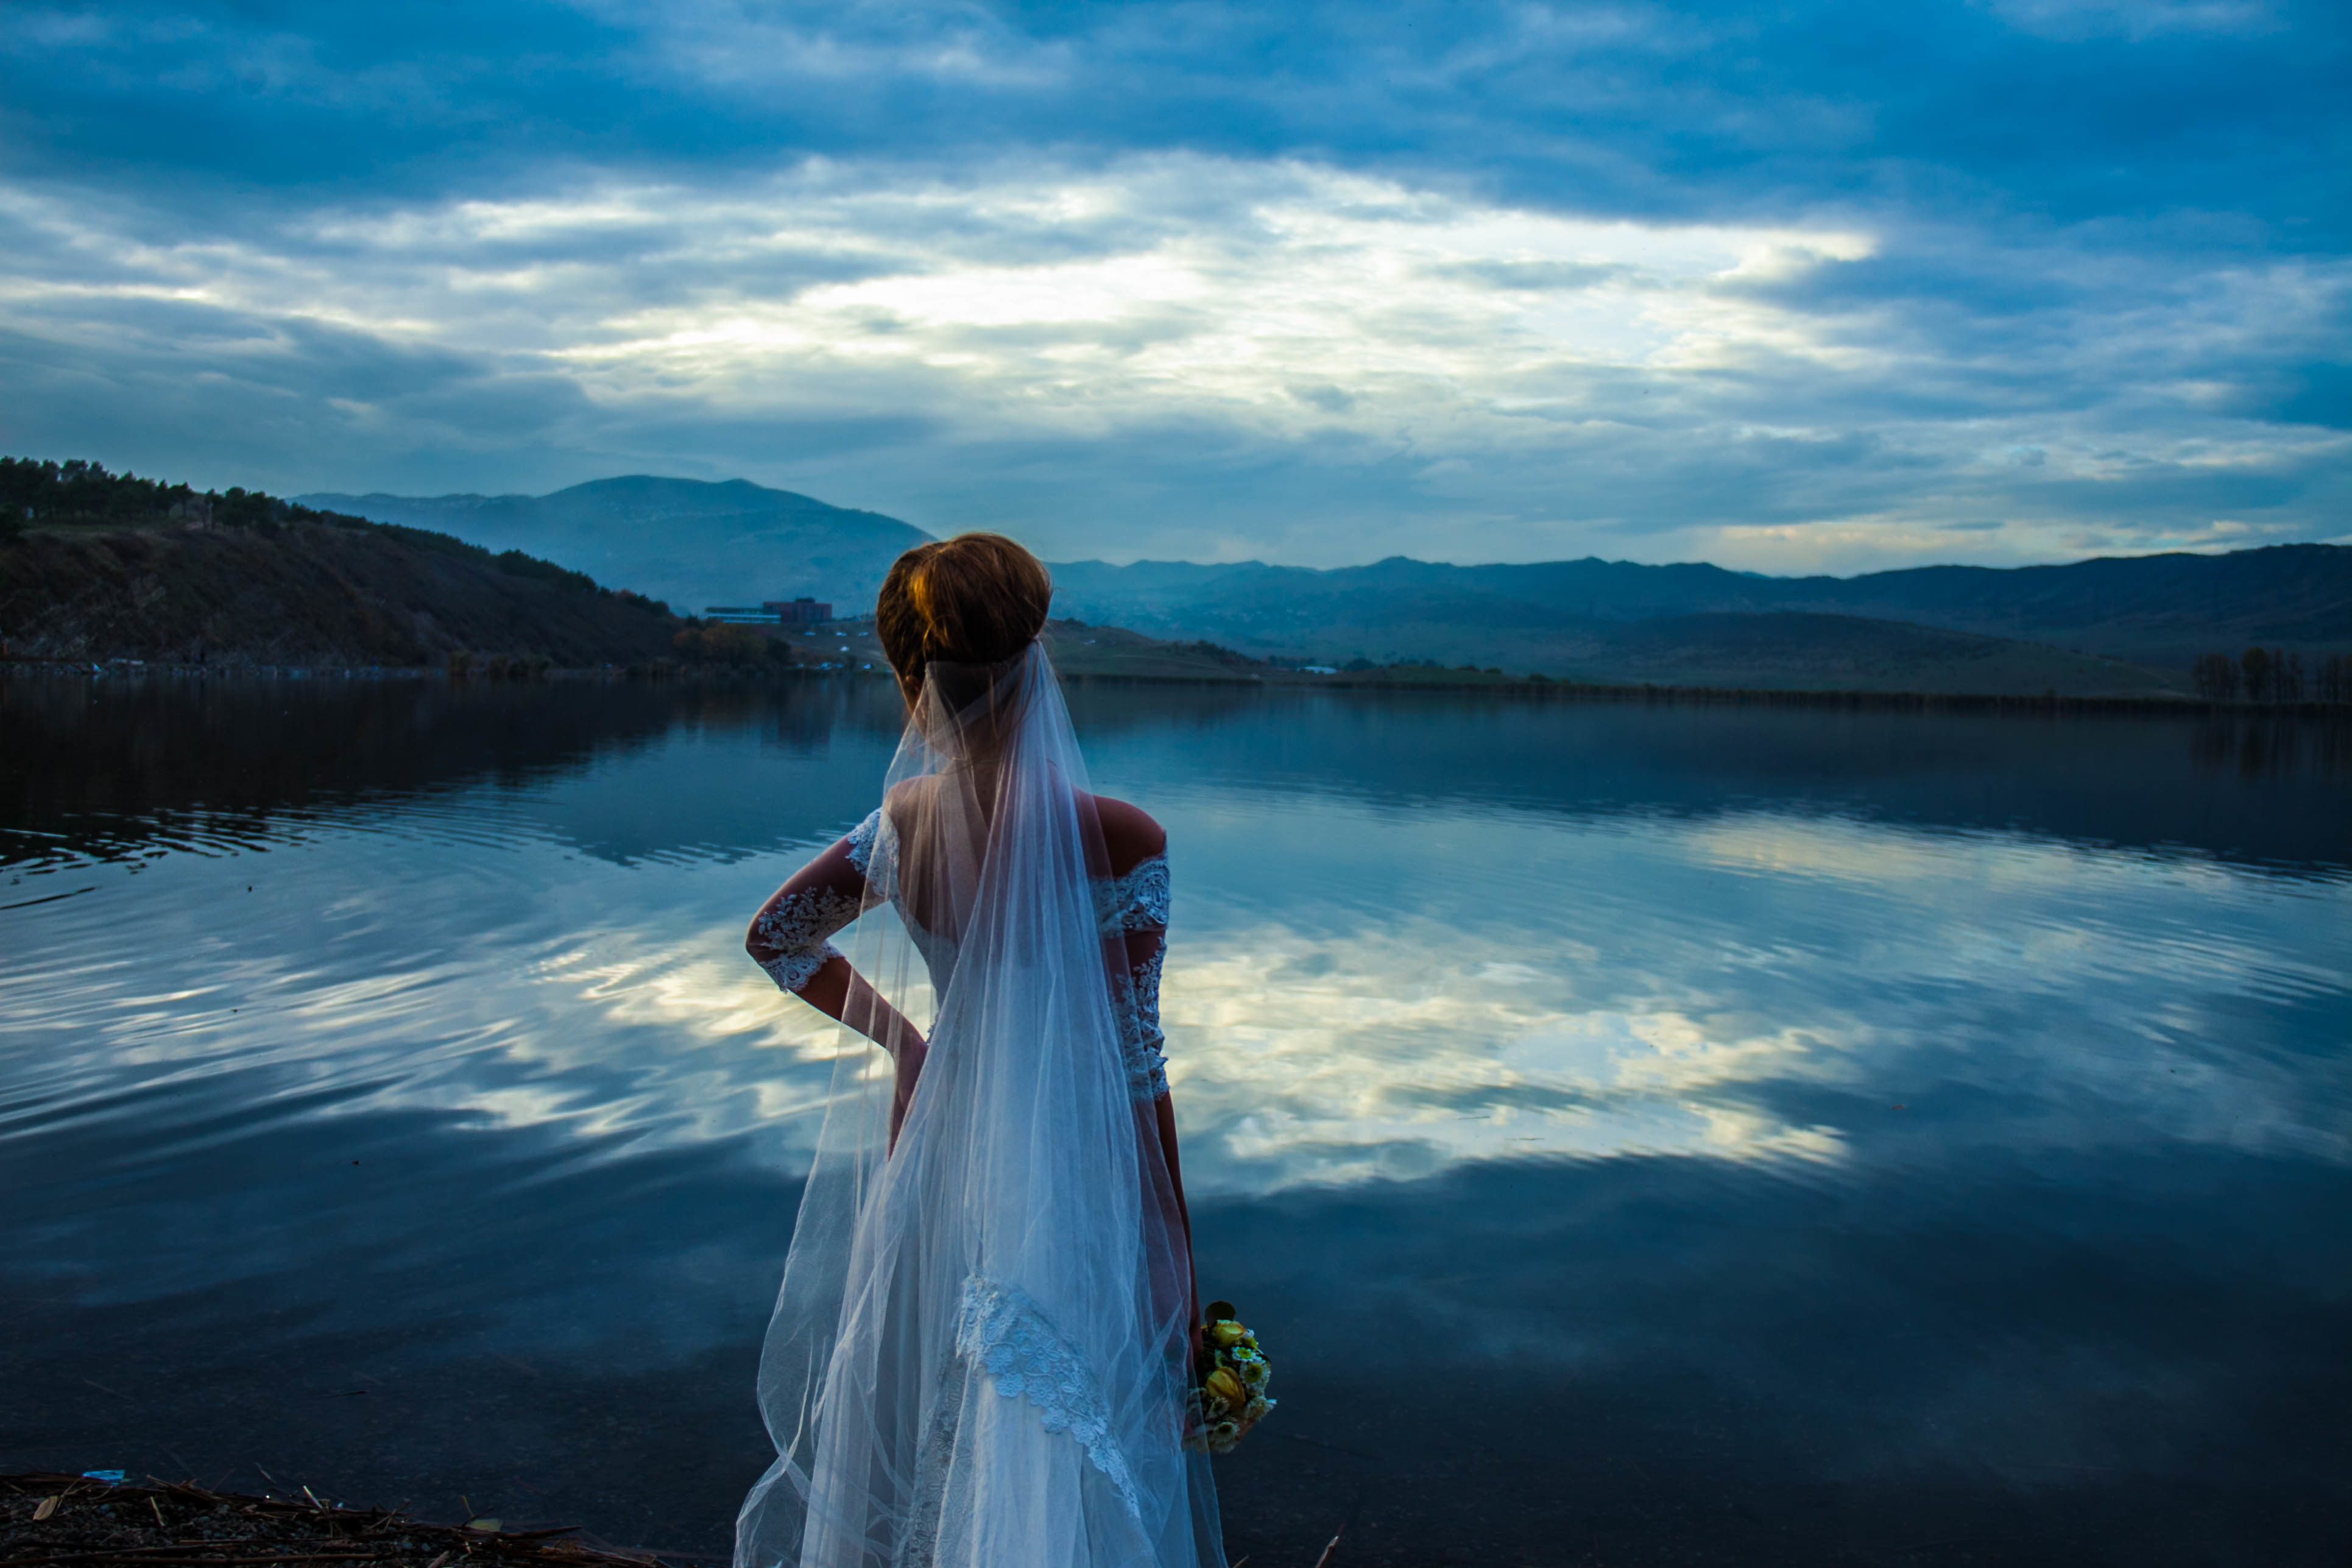 Девушка у озера 2007. Девушки на озере. Девушка в платье у озера. Девушка в свадебном платье на озере. Фотосессия на озере.